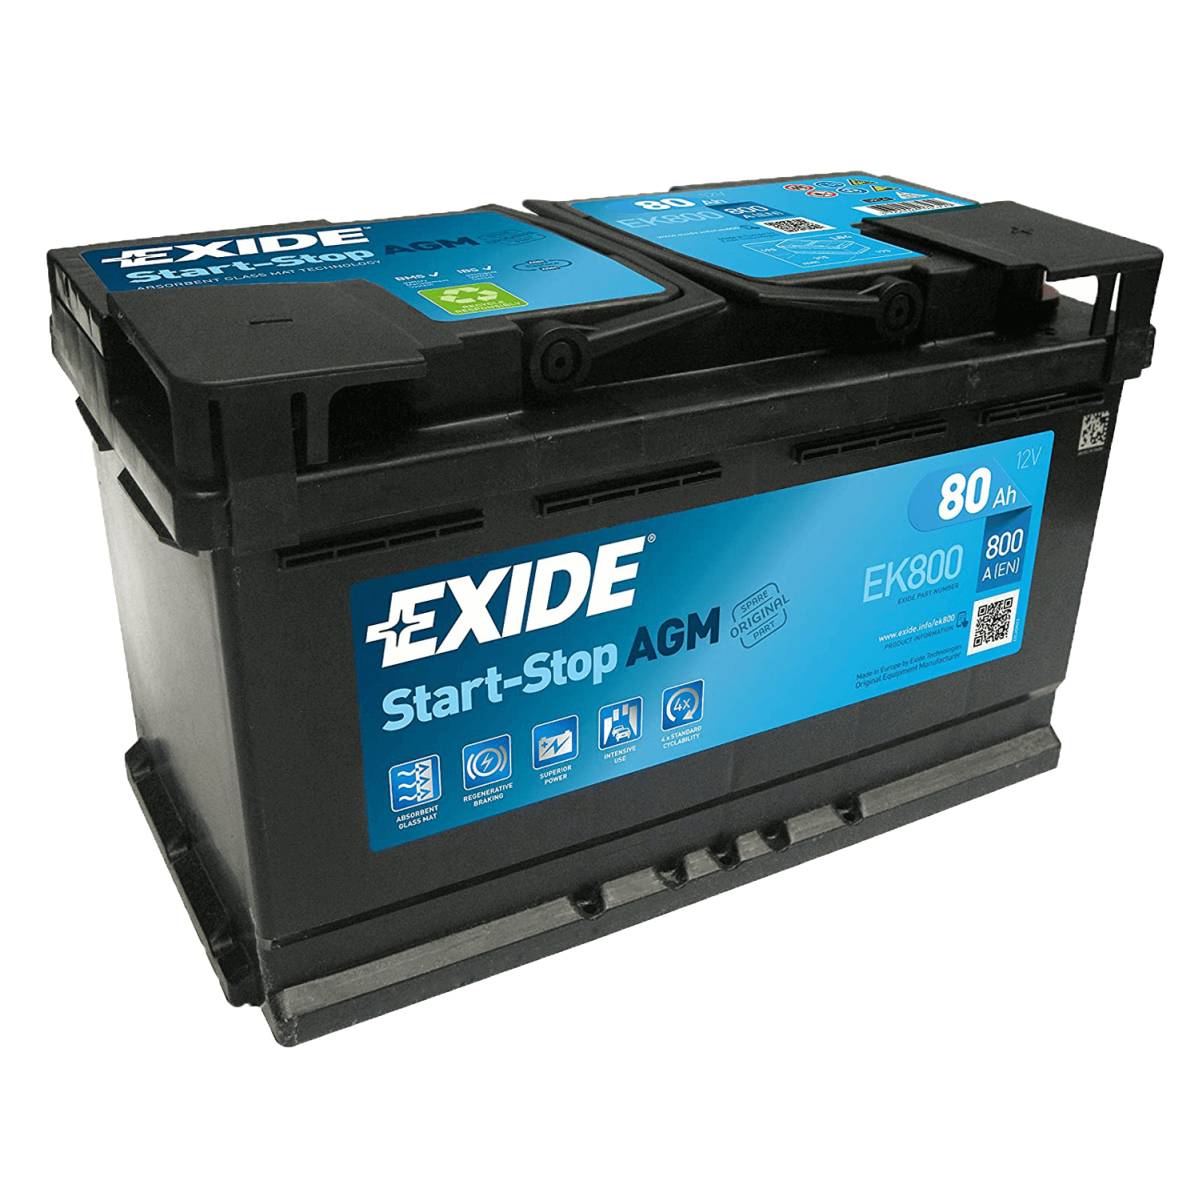 Exide EK800 Start-Stop AGM 12V 80Ah 800A batteria auto